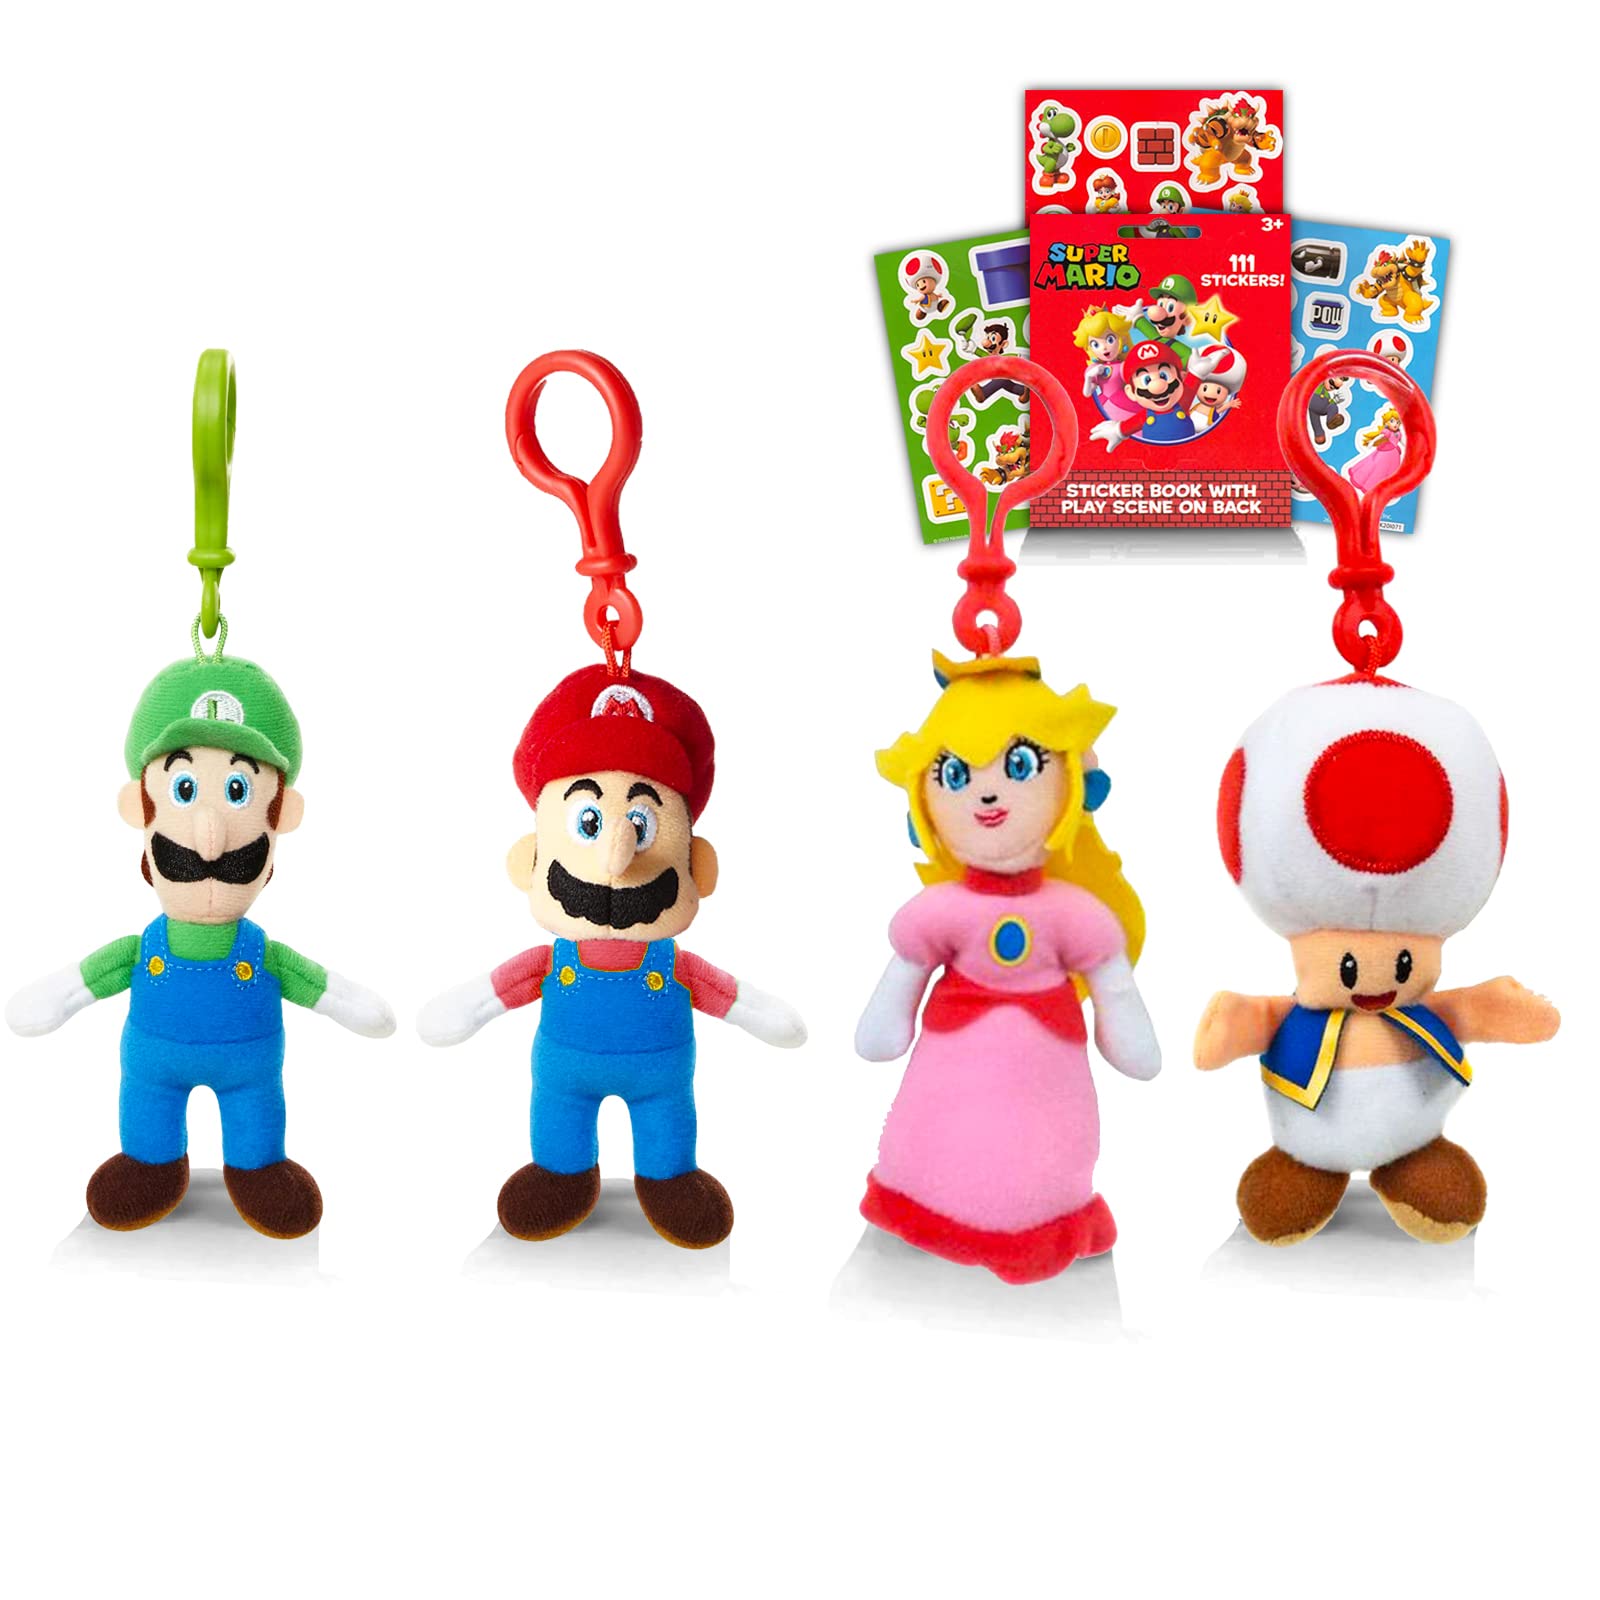 Mario Shop Nintendo Mario and Friends Plush Keychain Set - Bundle with Mario, Luigi, Princess Peach, and Toad Plushie Figures Pl